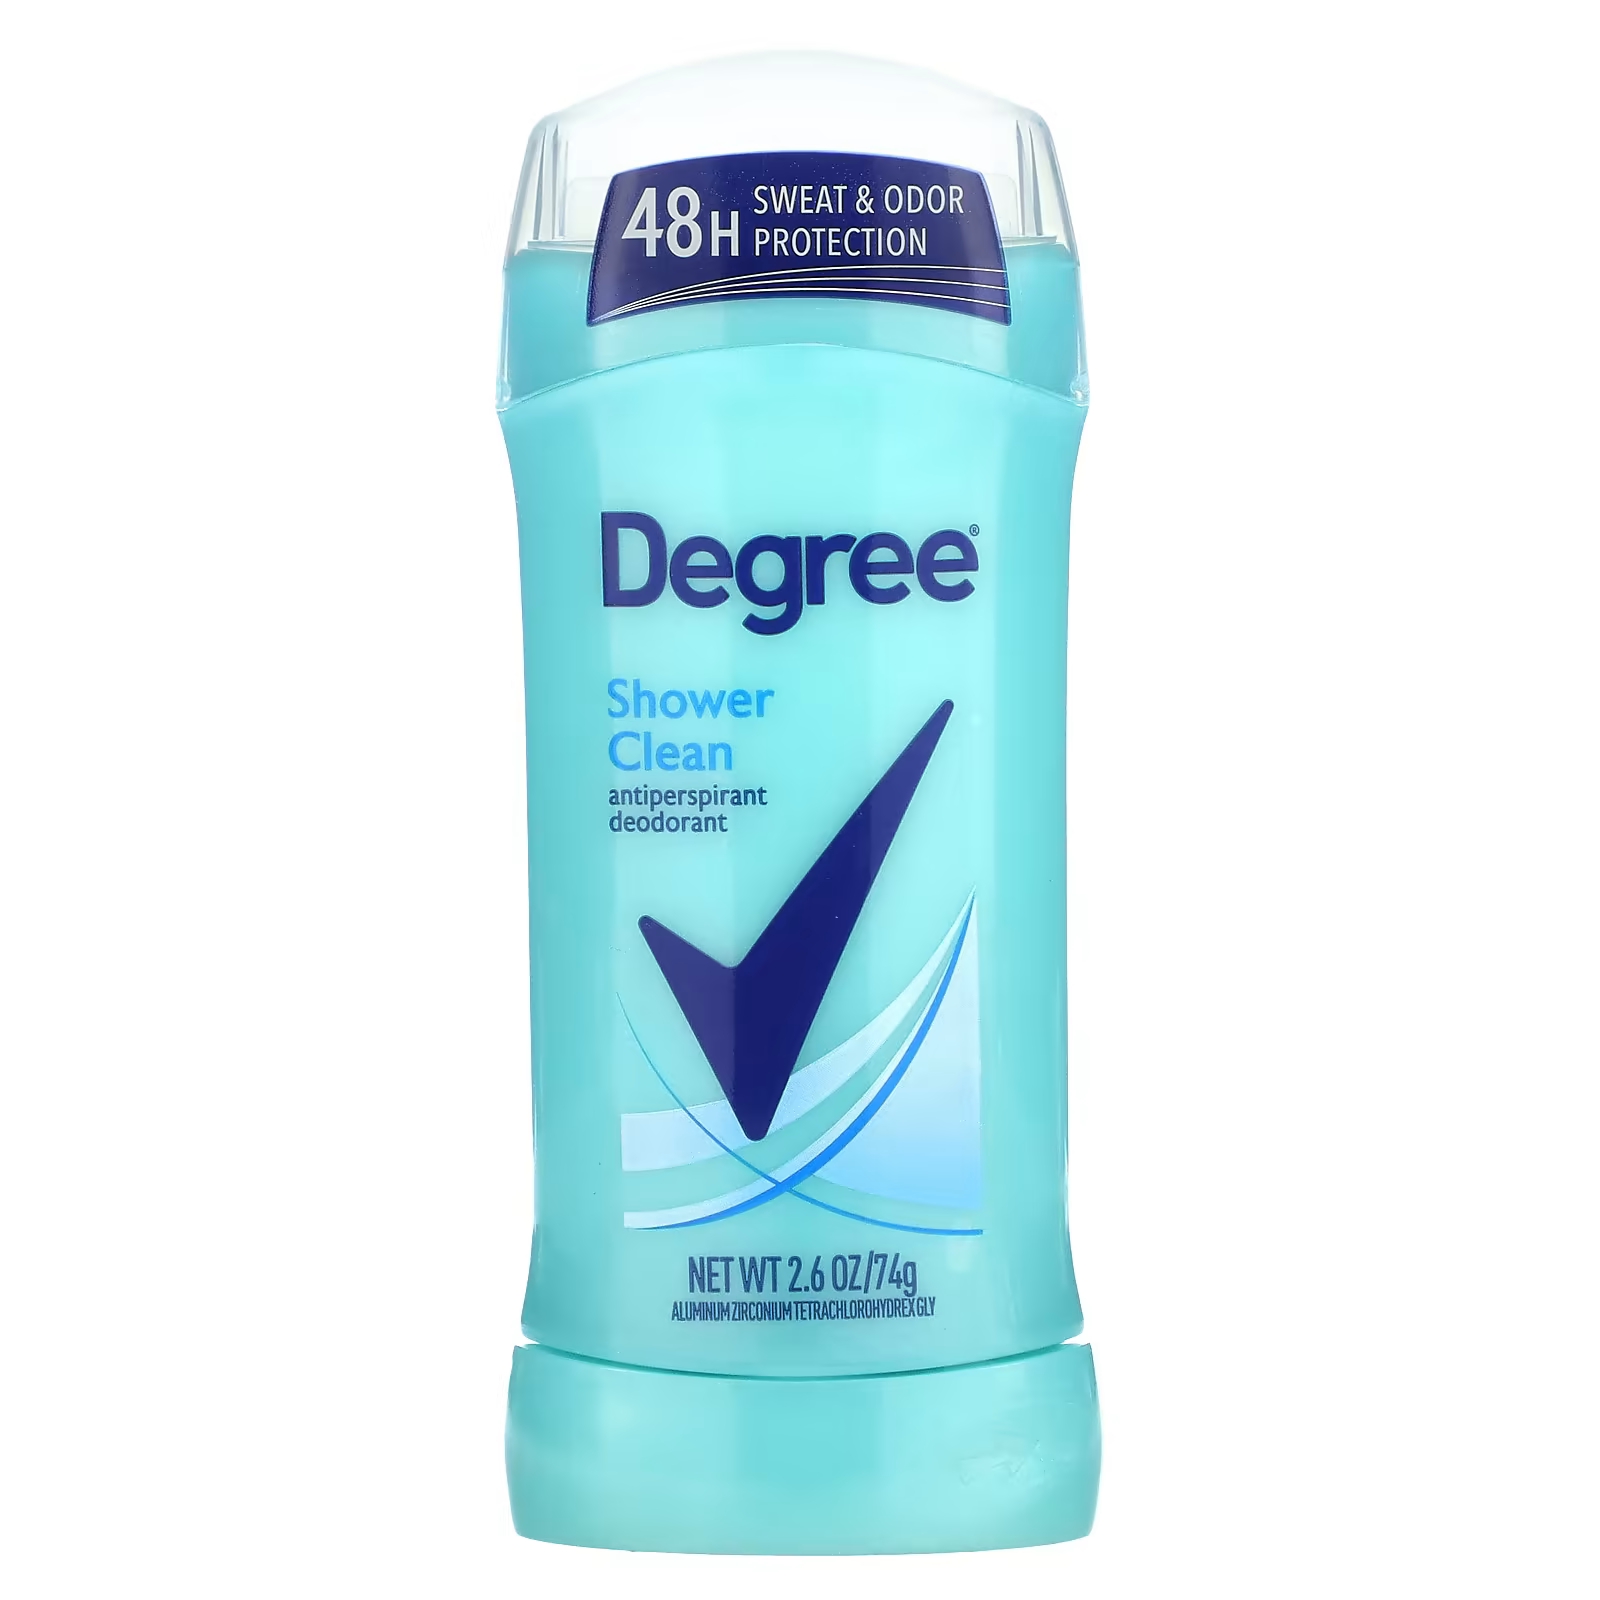 Дезодорант-антиперспирант Degree Deodorant Clean для душа дезодорант антиперспирант vickywinson 10 мл для удаления запаха подмышек и ног